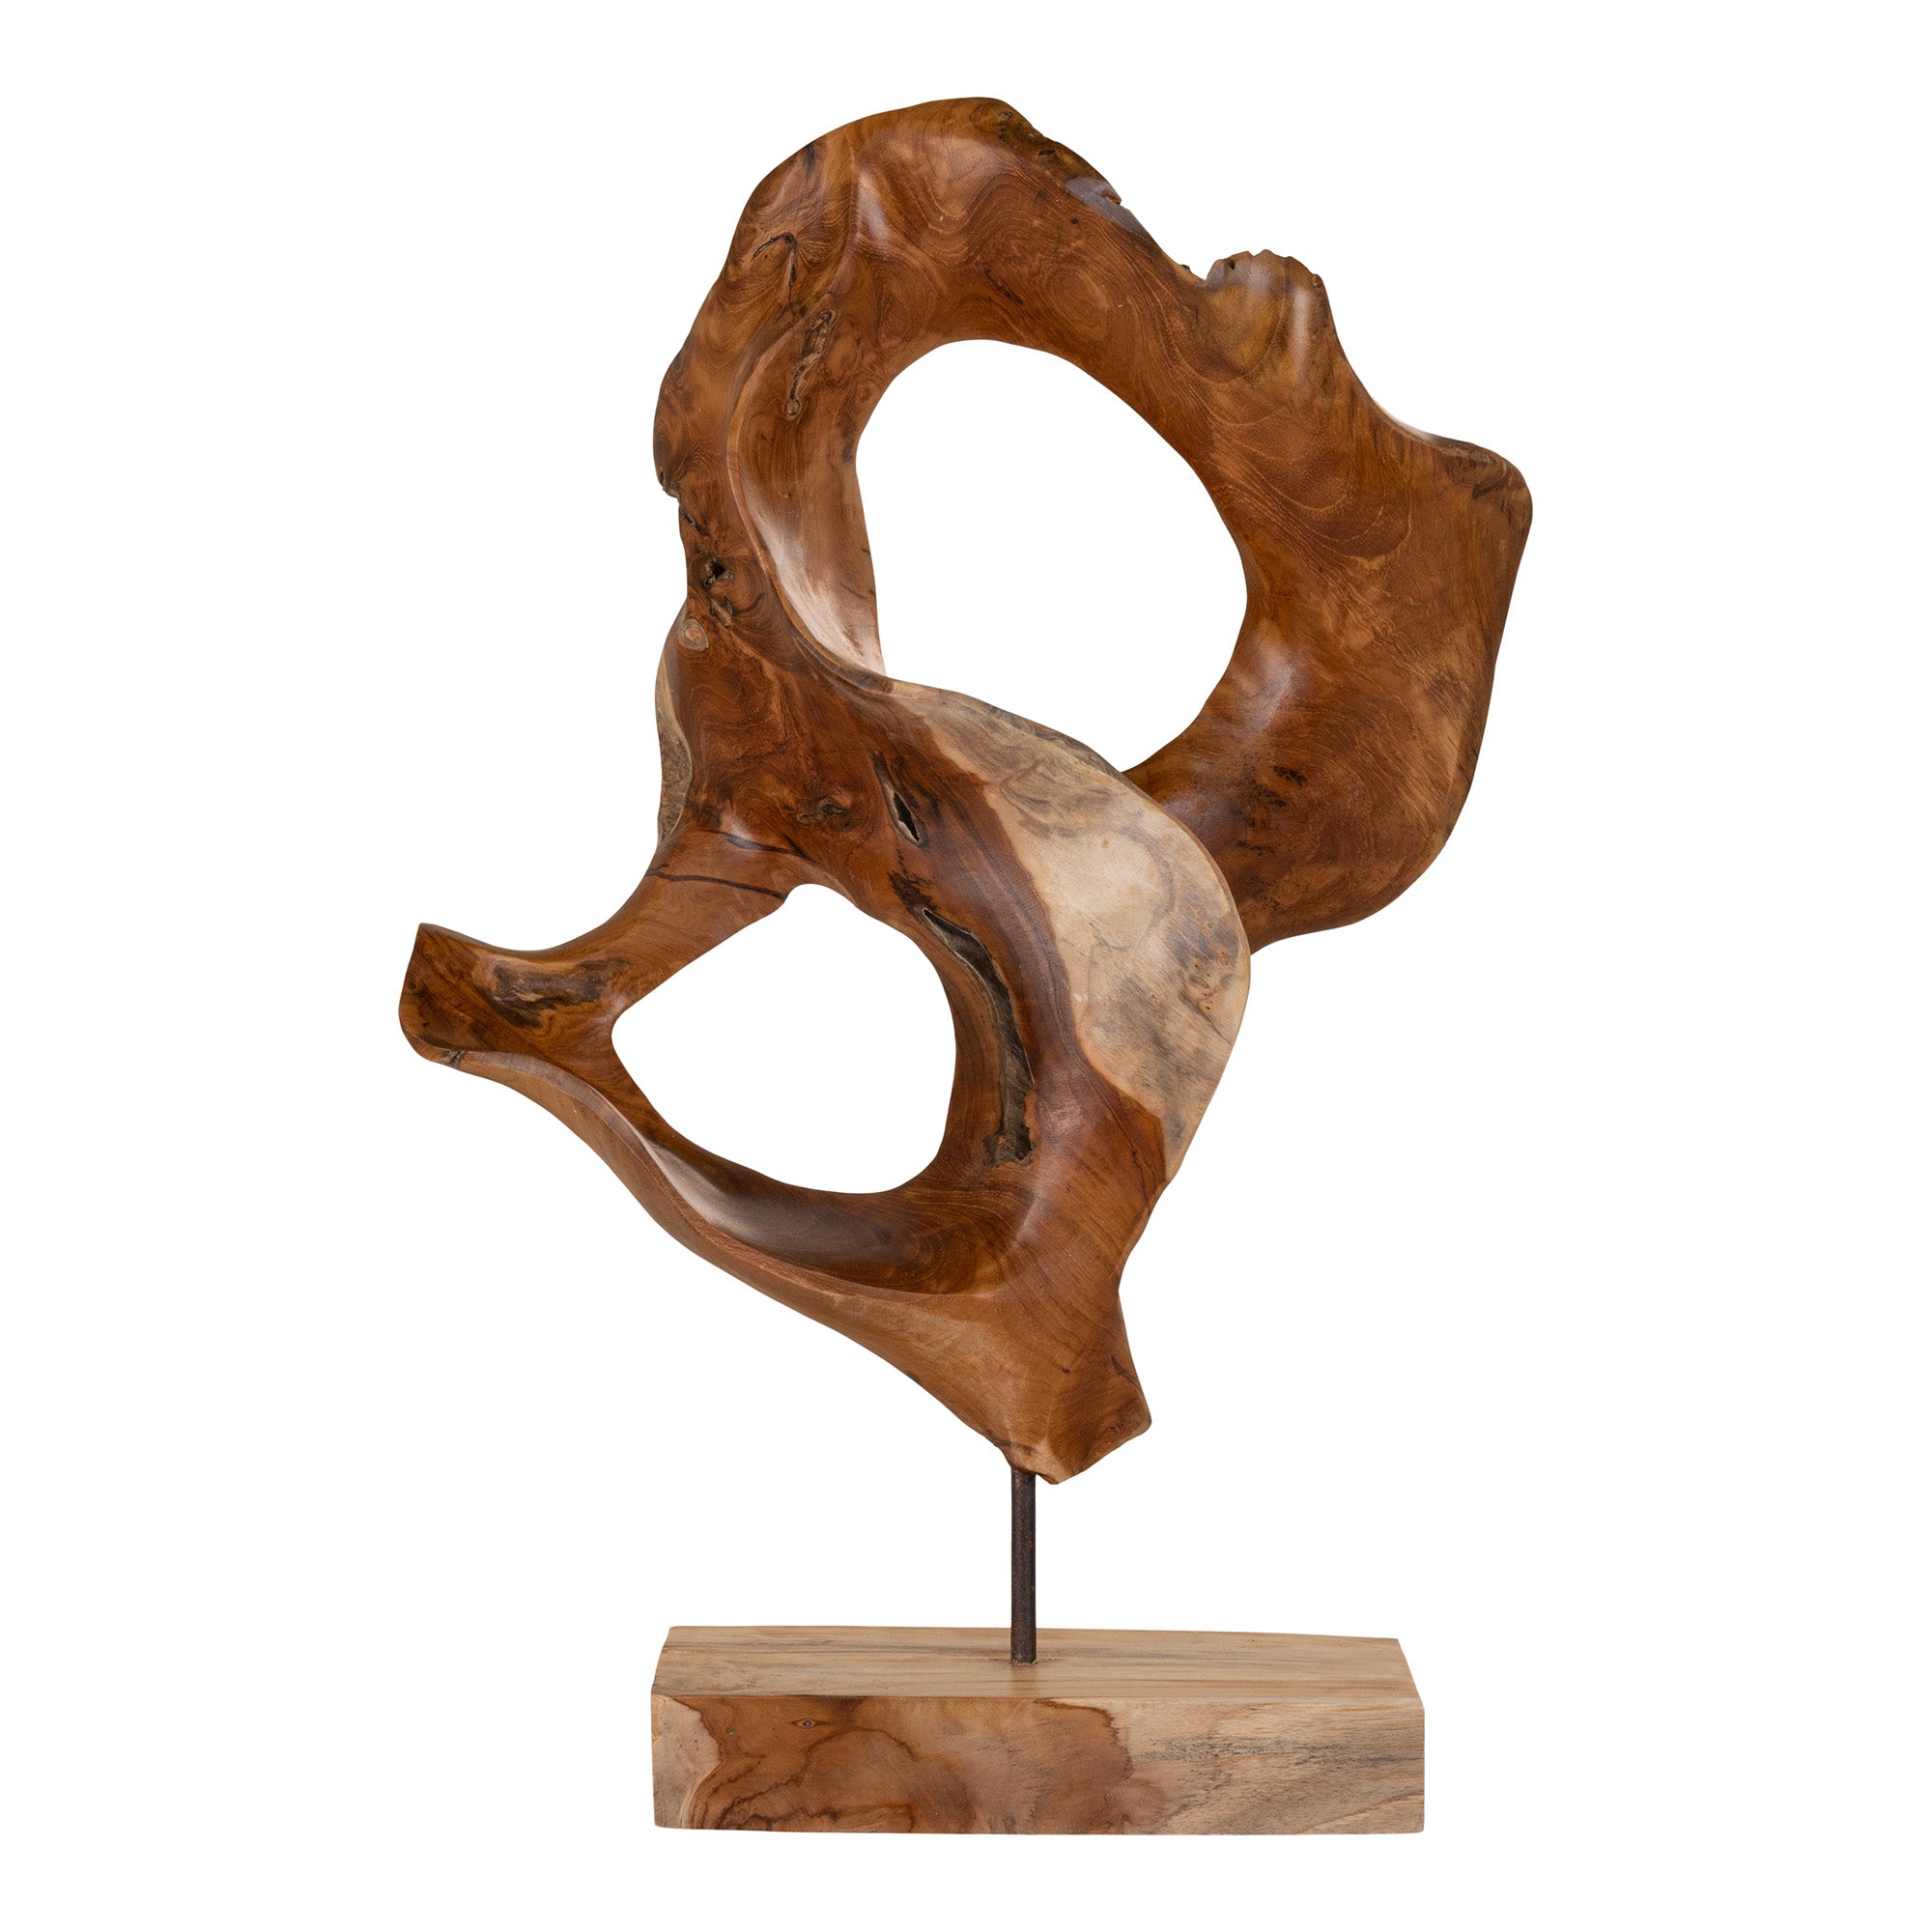 Donato Skulptur - Skulptur I Teaktræ, Unik Organisk Form, Natur, 30X20X60 Cm ⎮ 5713917018994 ⎮ 4501170 